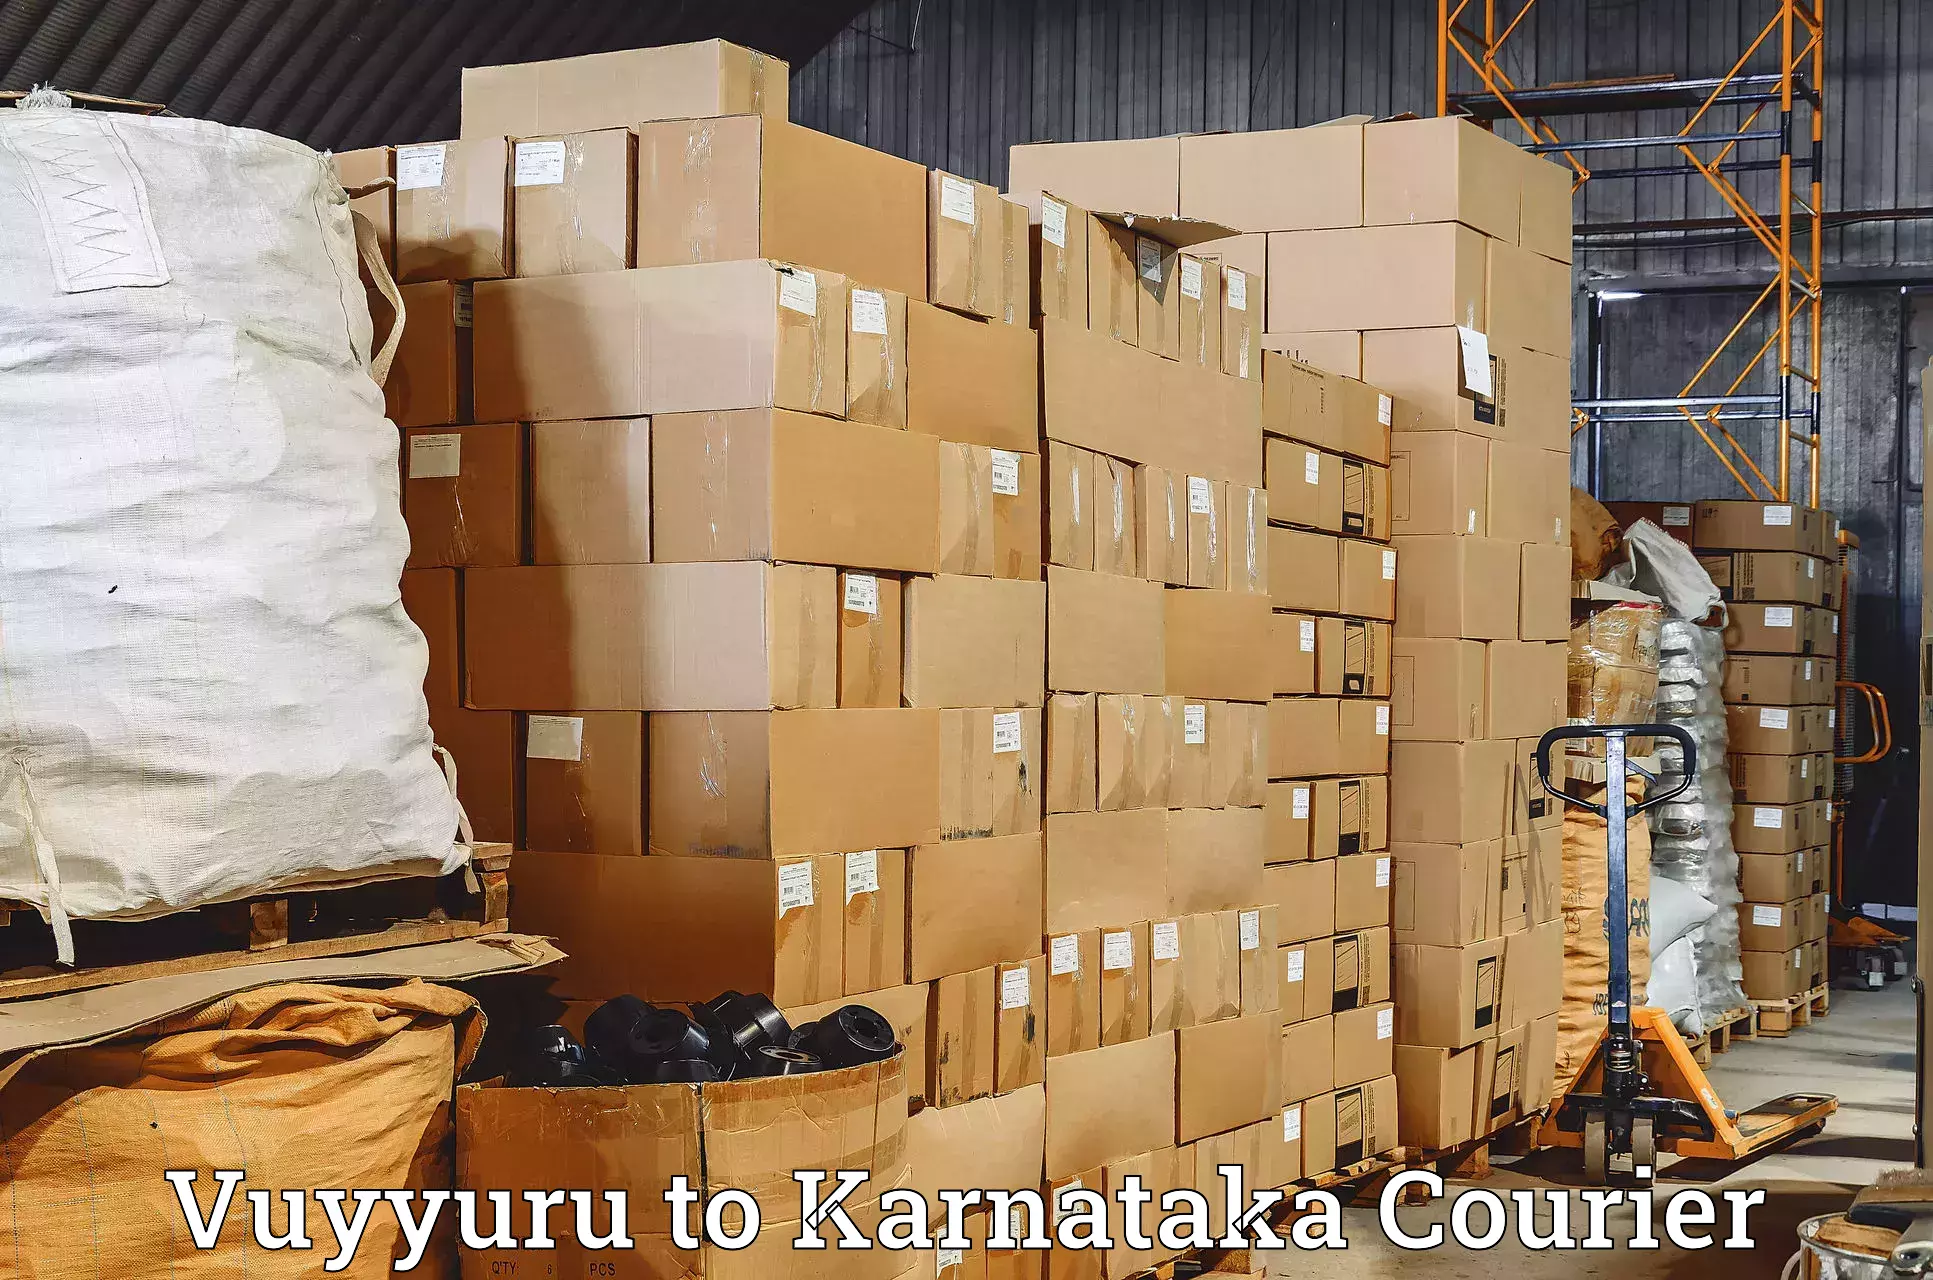 Professional courier handling Vuyyuru to Karnataka